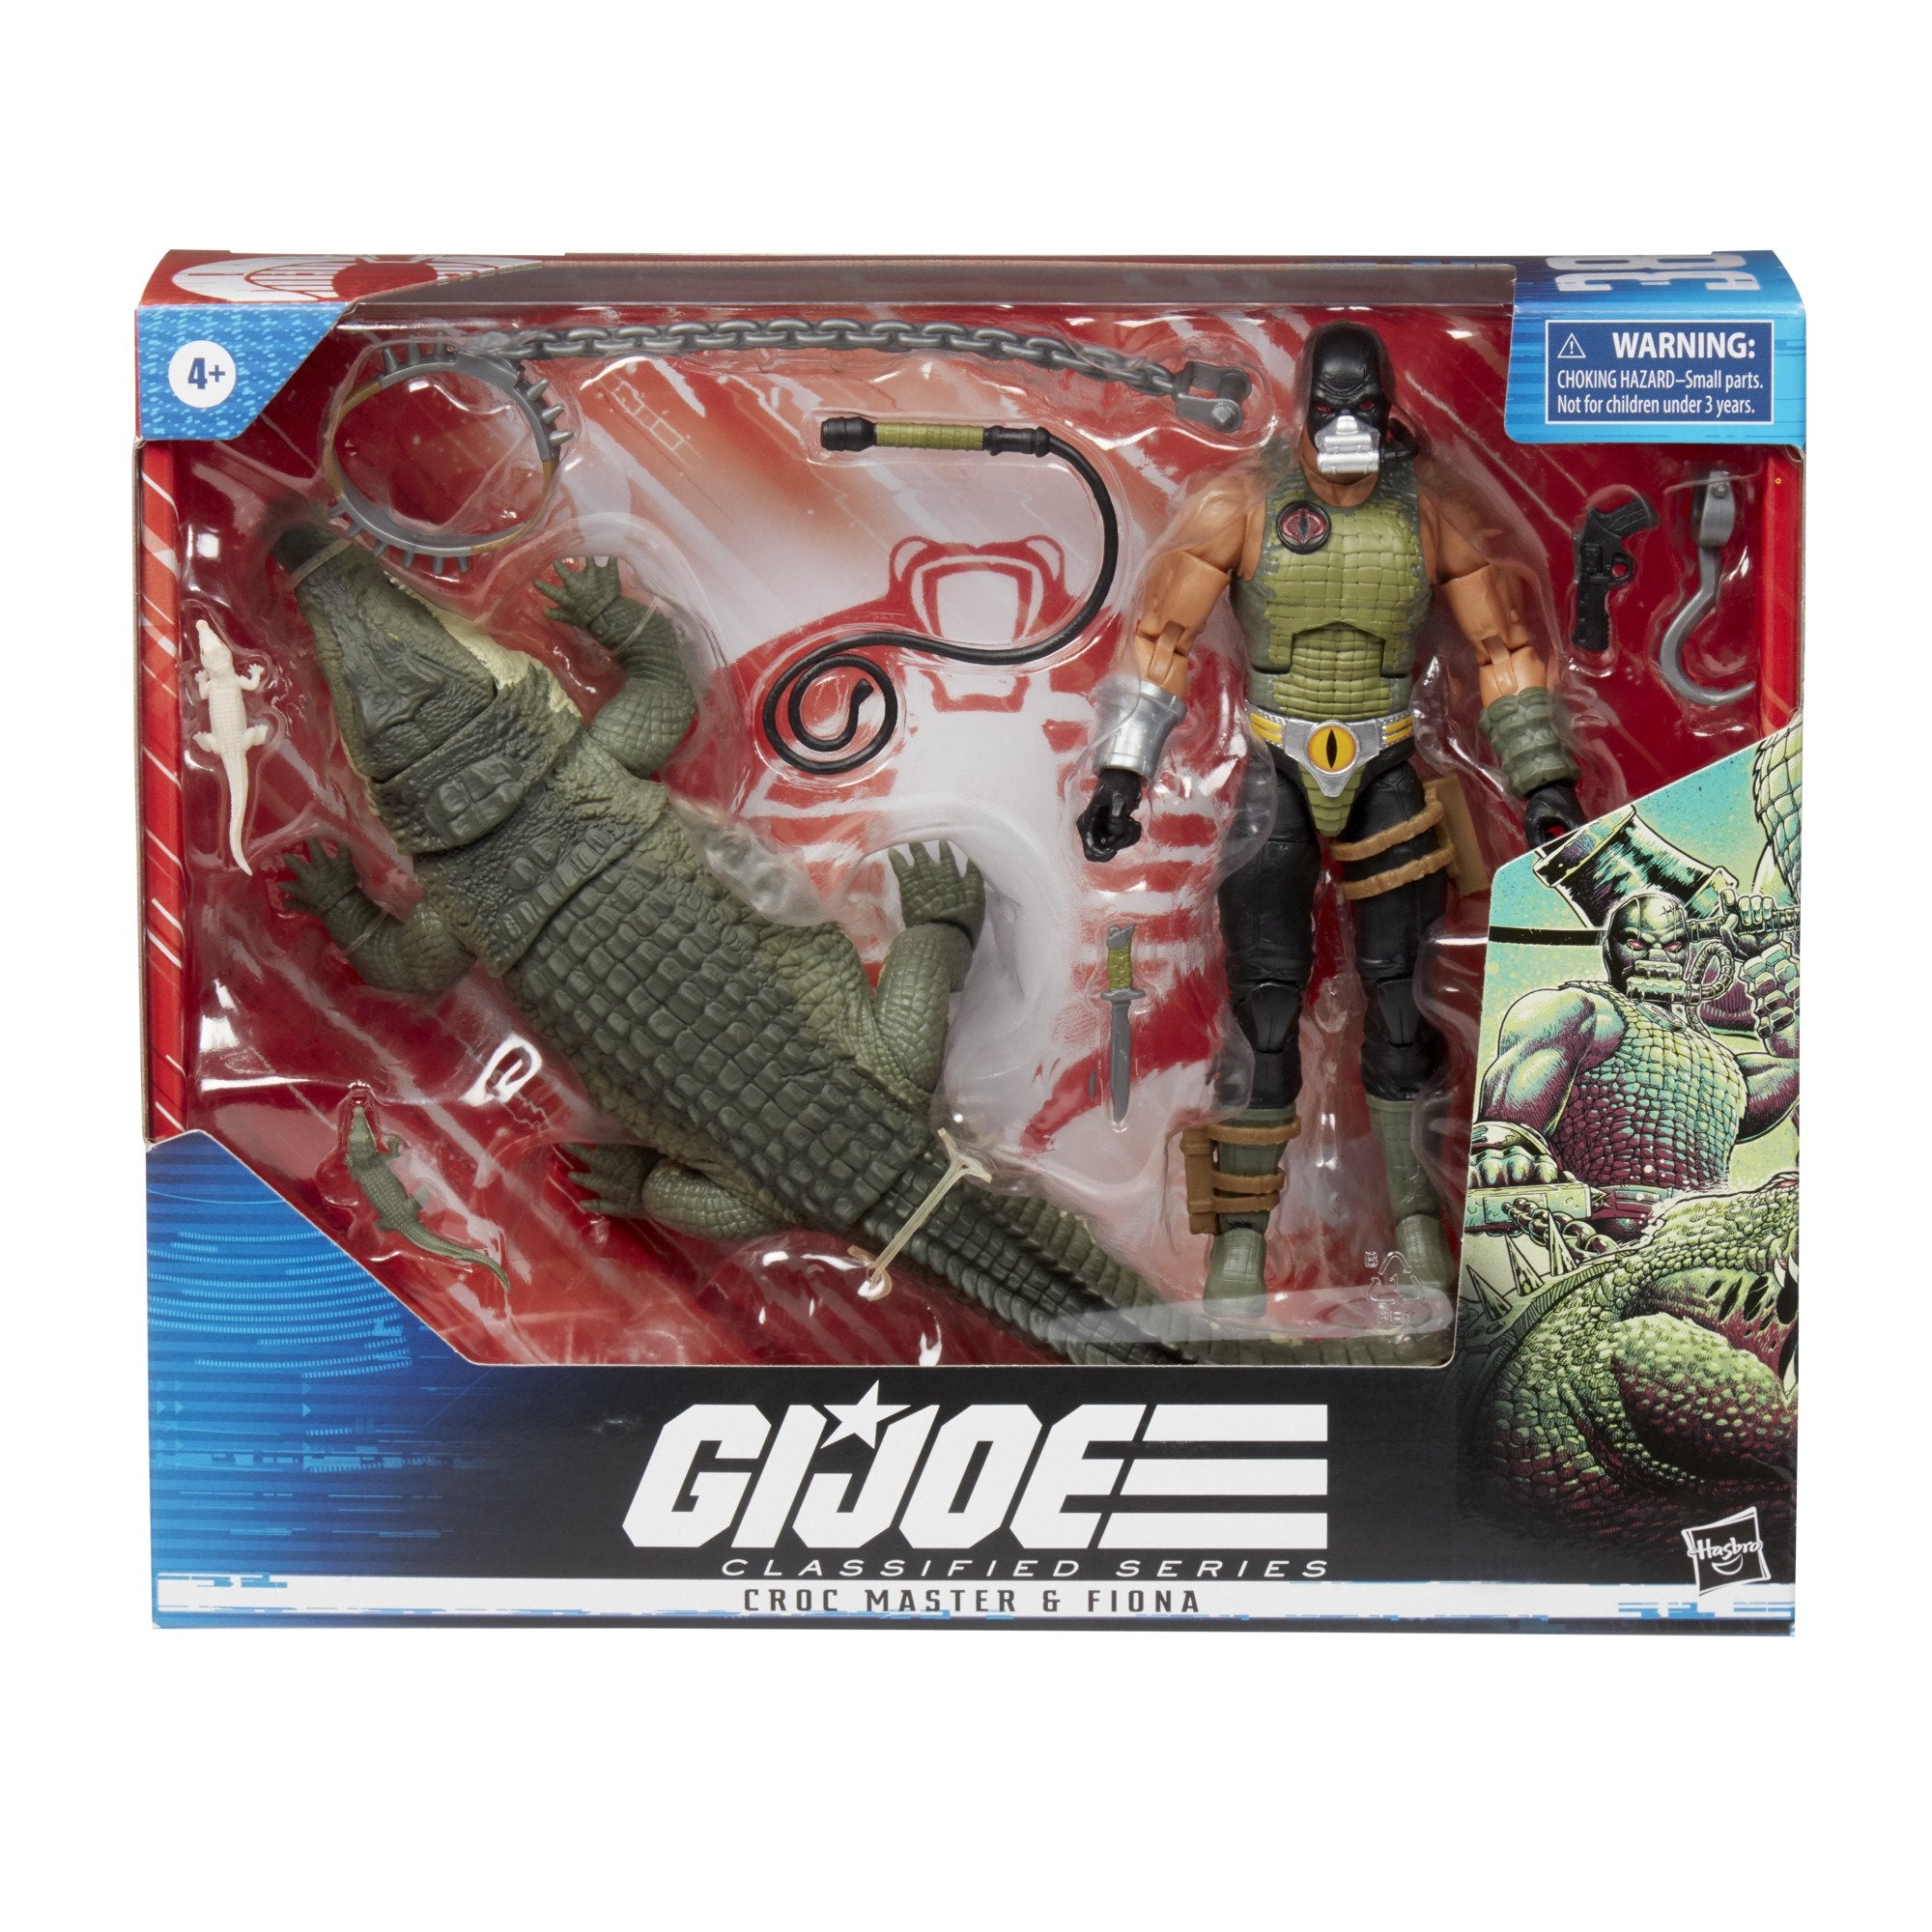 G.I. Joe Classified Series - Croc Master and Alligator